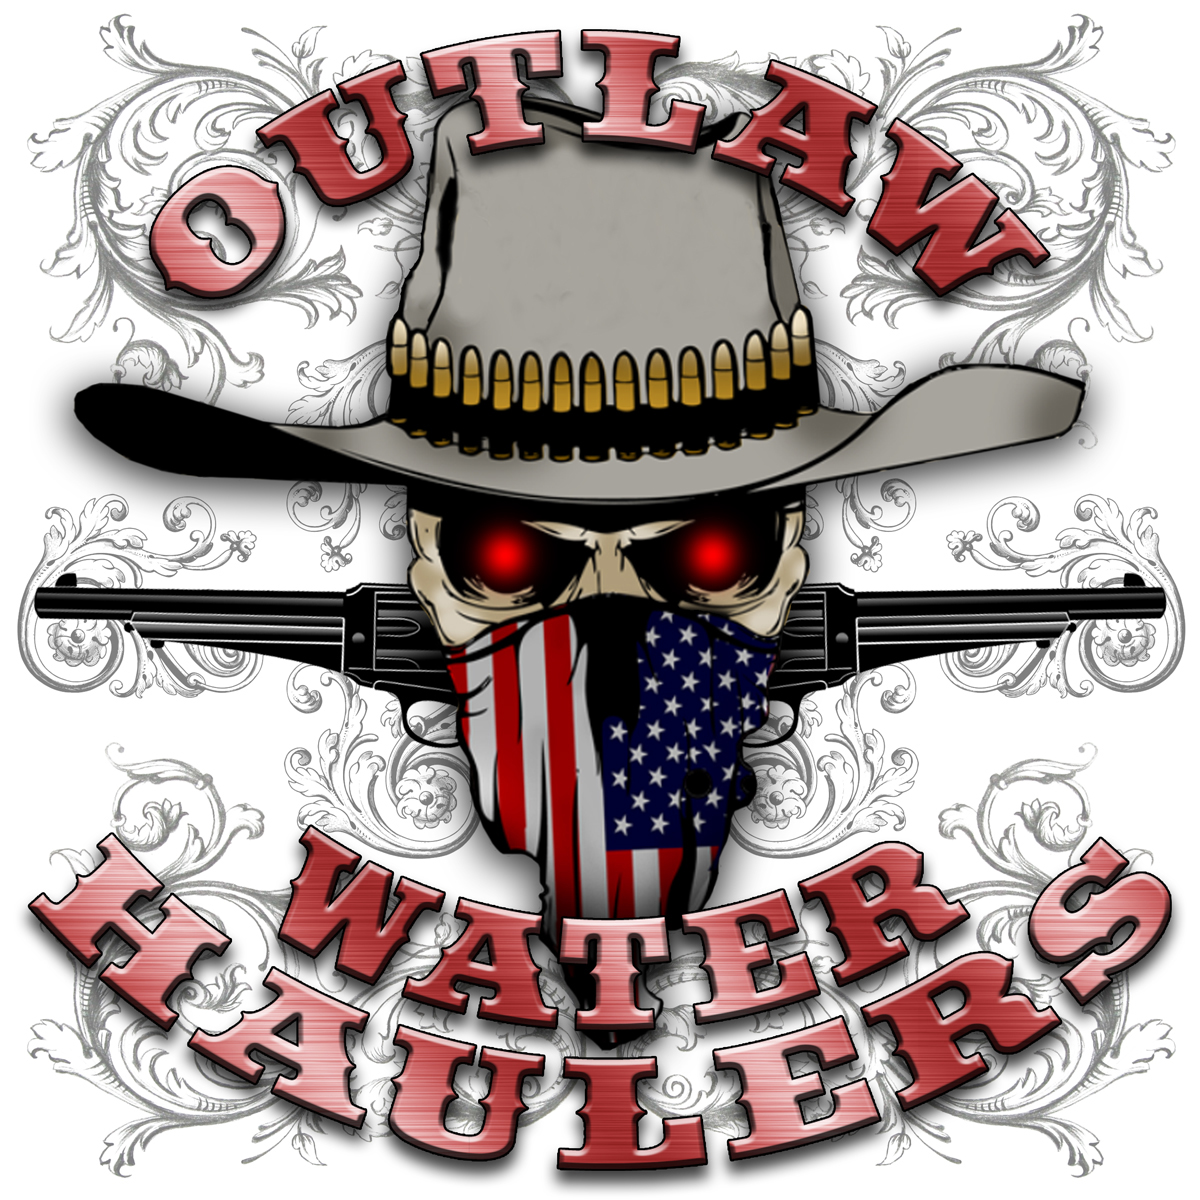 10643 Outlaw water haulers 3b.jpg